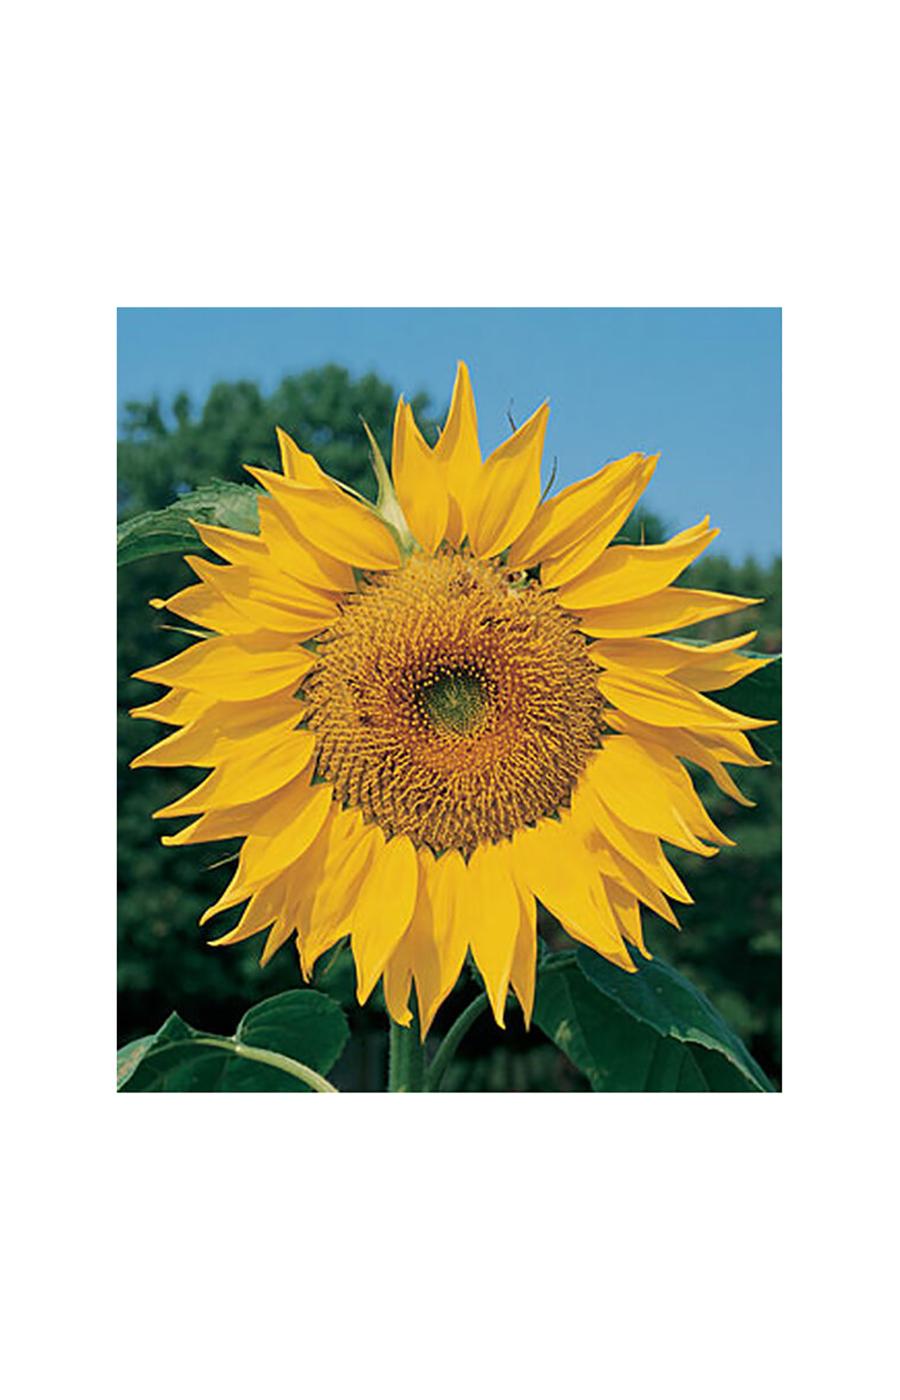 Burpee Sunflower, Mammoth Russian Seeds; image 2 of 2